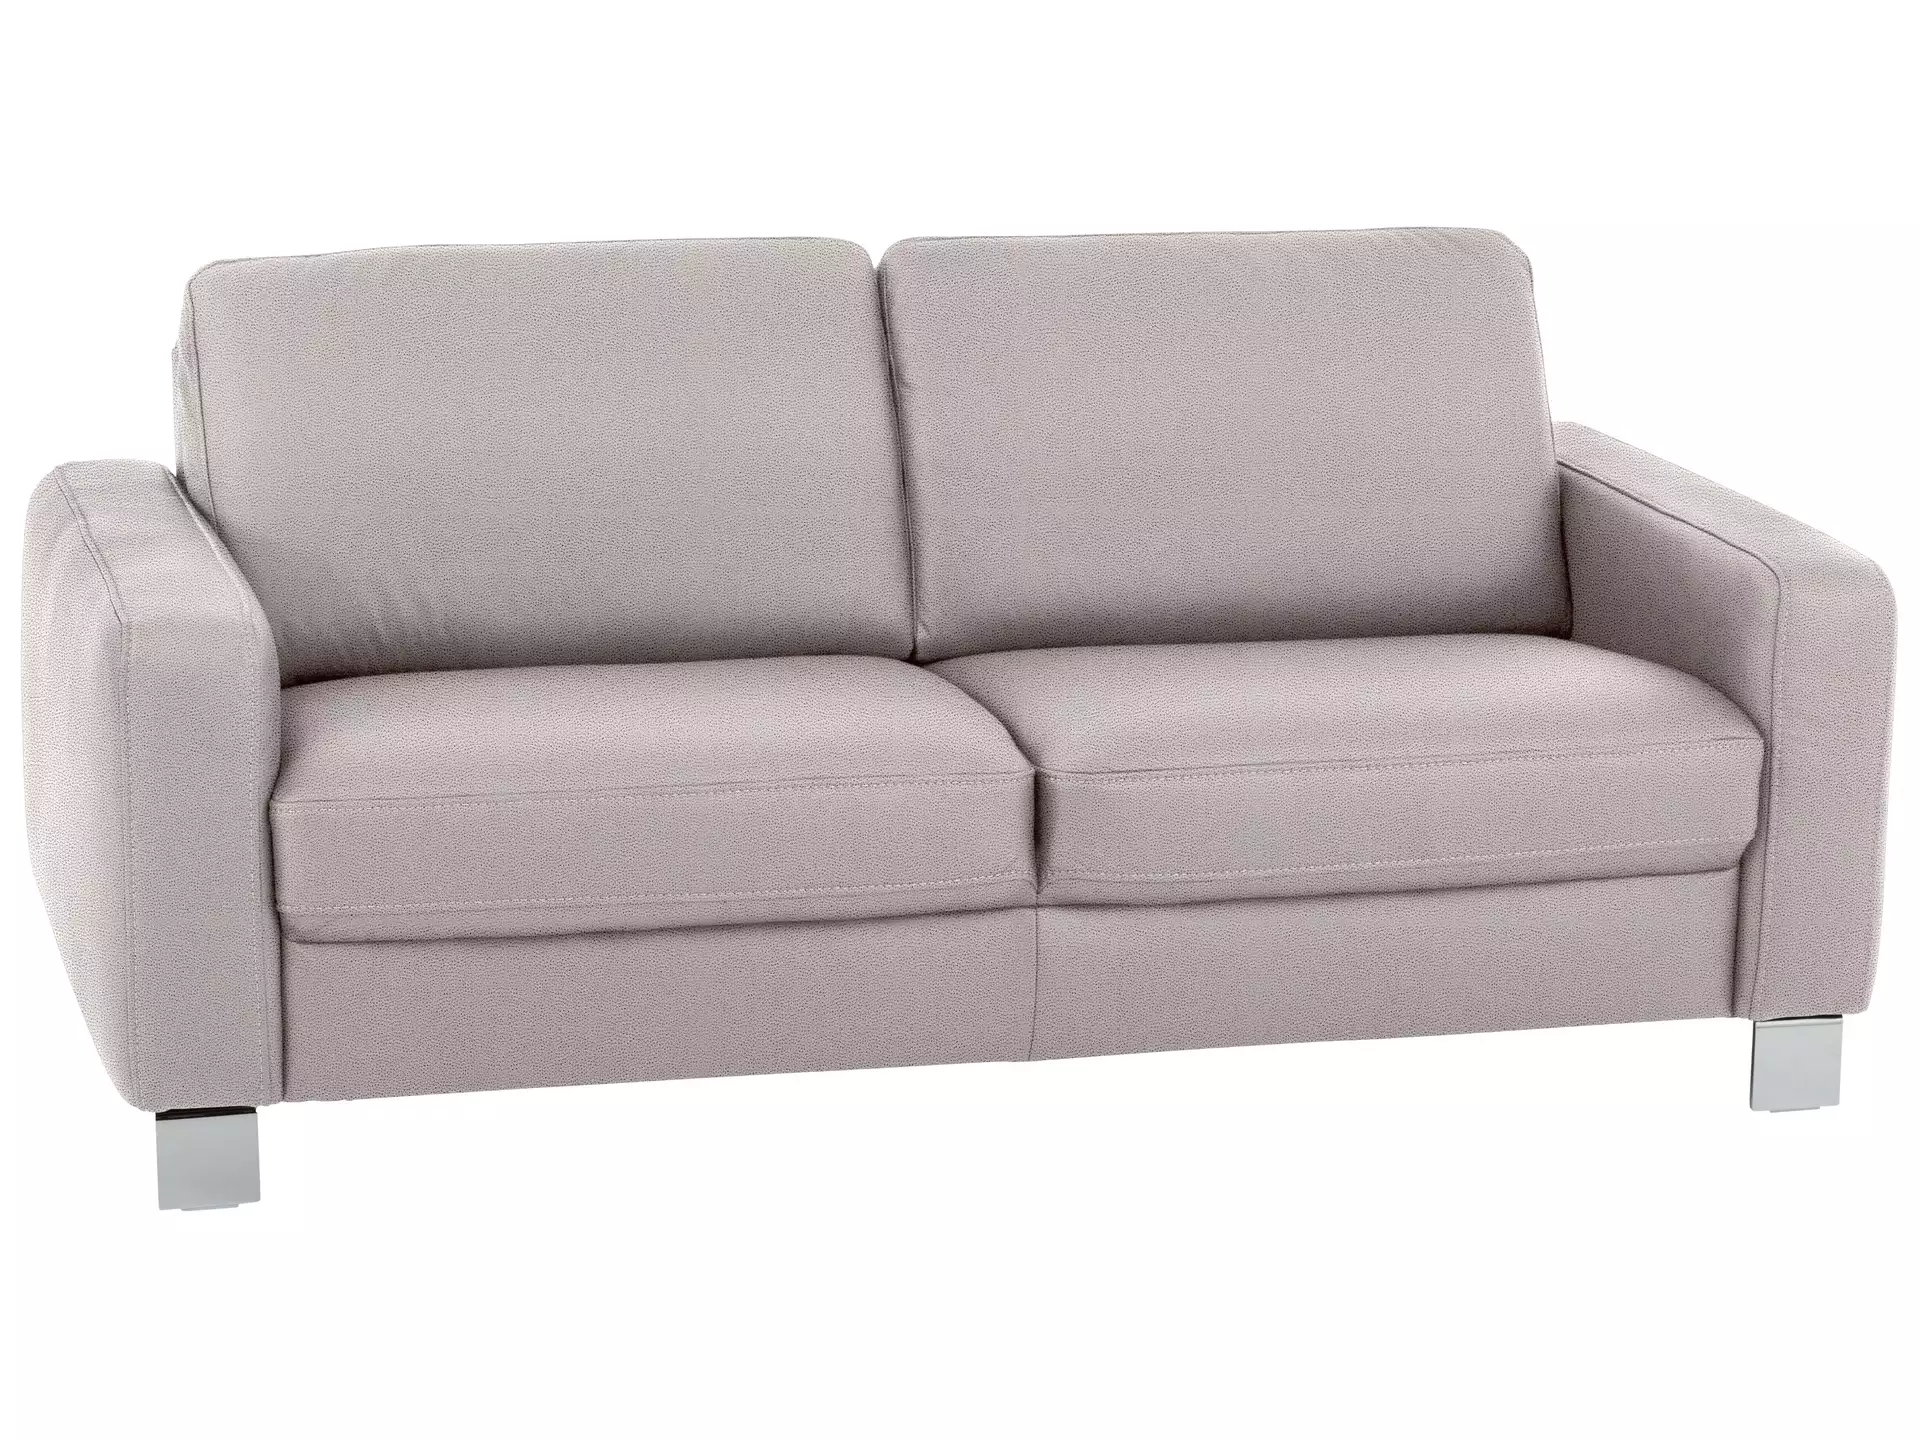 Sofa Shetland Basic B: 188 cm Polipol / Farbe: Silver / Material: Microfaser Basic